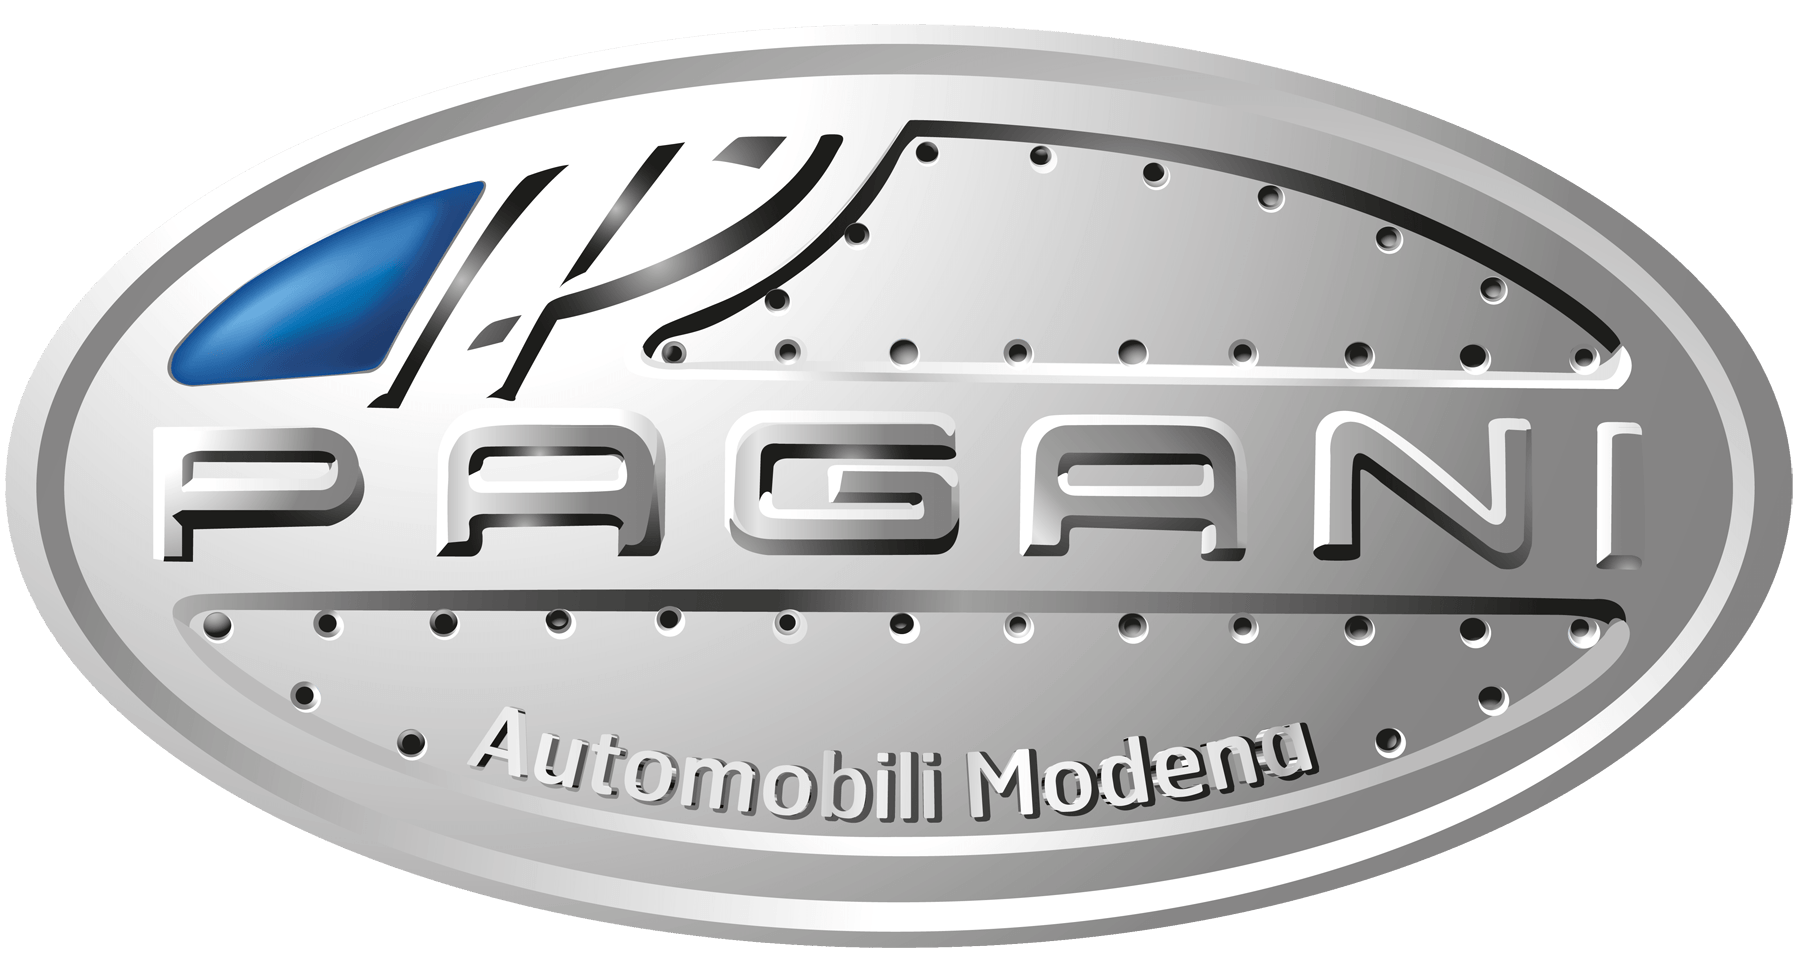 Pagani Logo - Pagani Logo | World Cars Brands